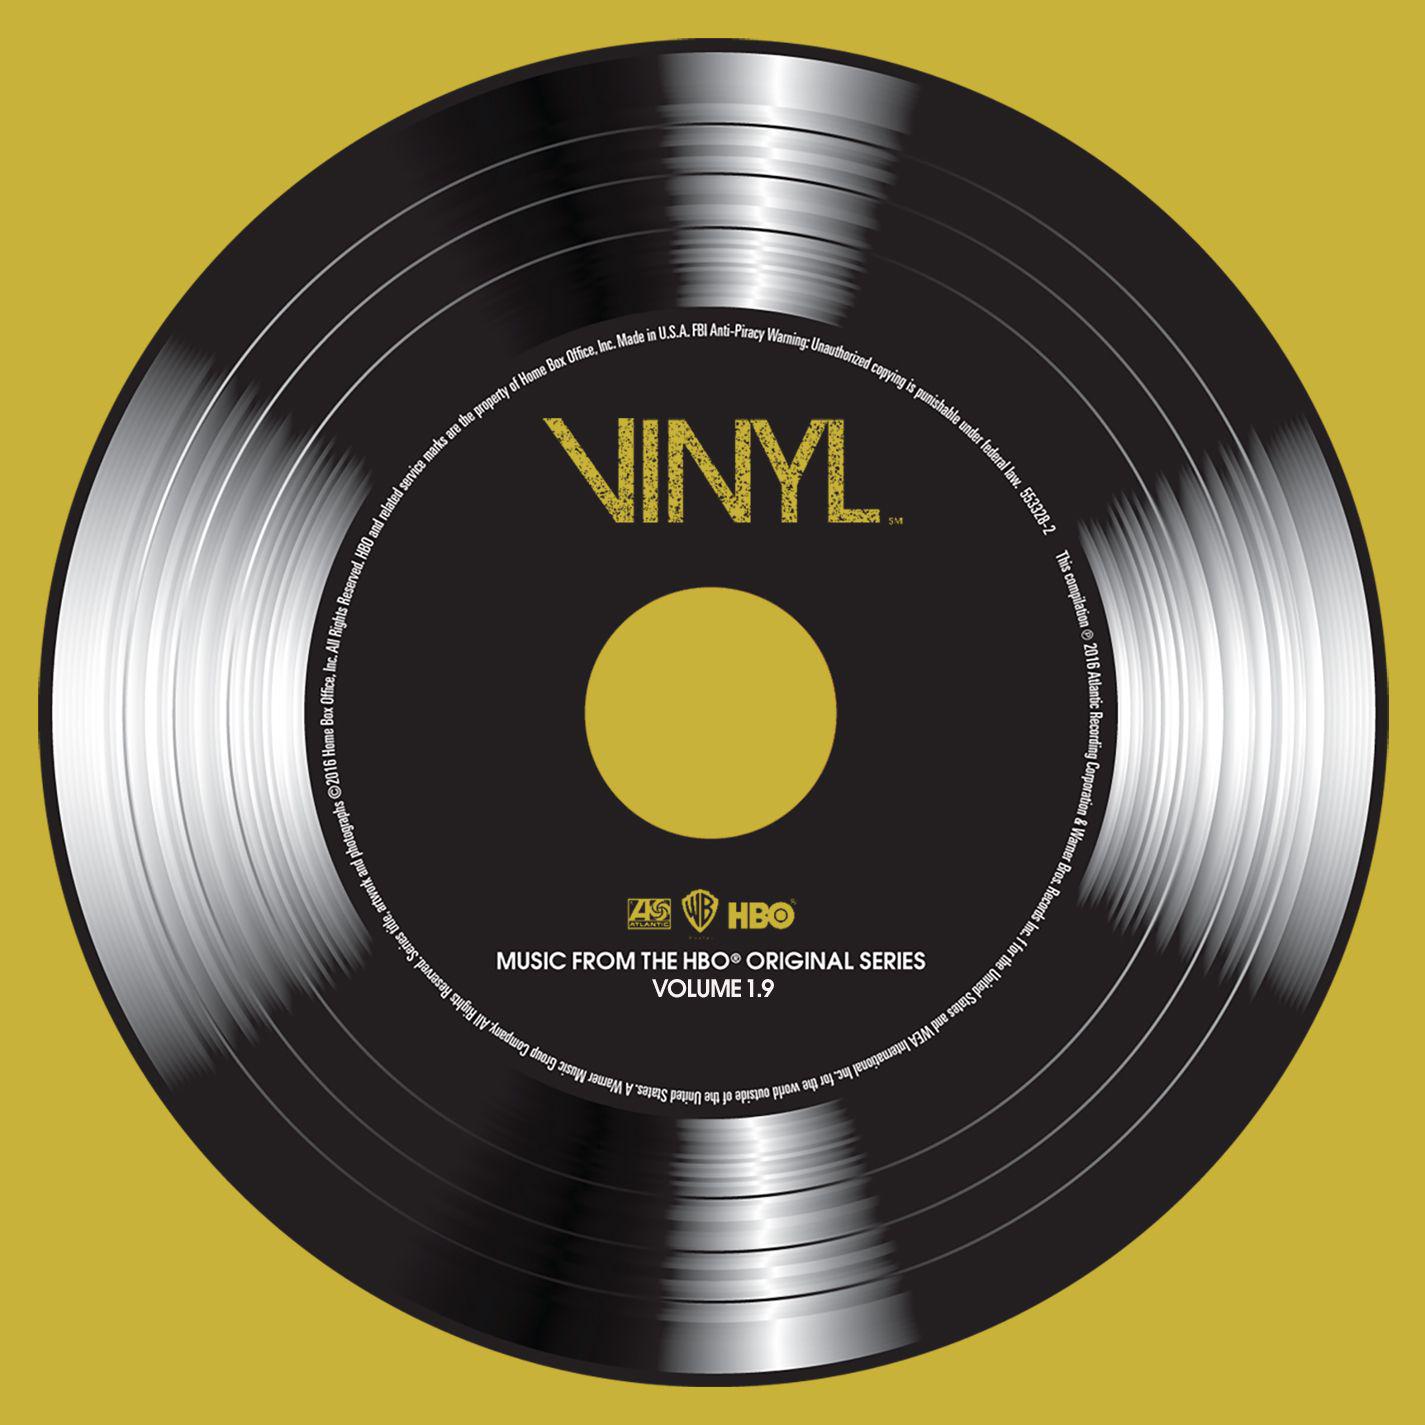 VINYL: Music From The HBO Original Series  Vol. 1. 9